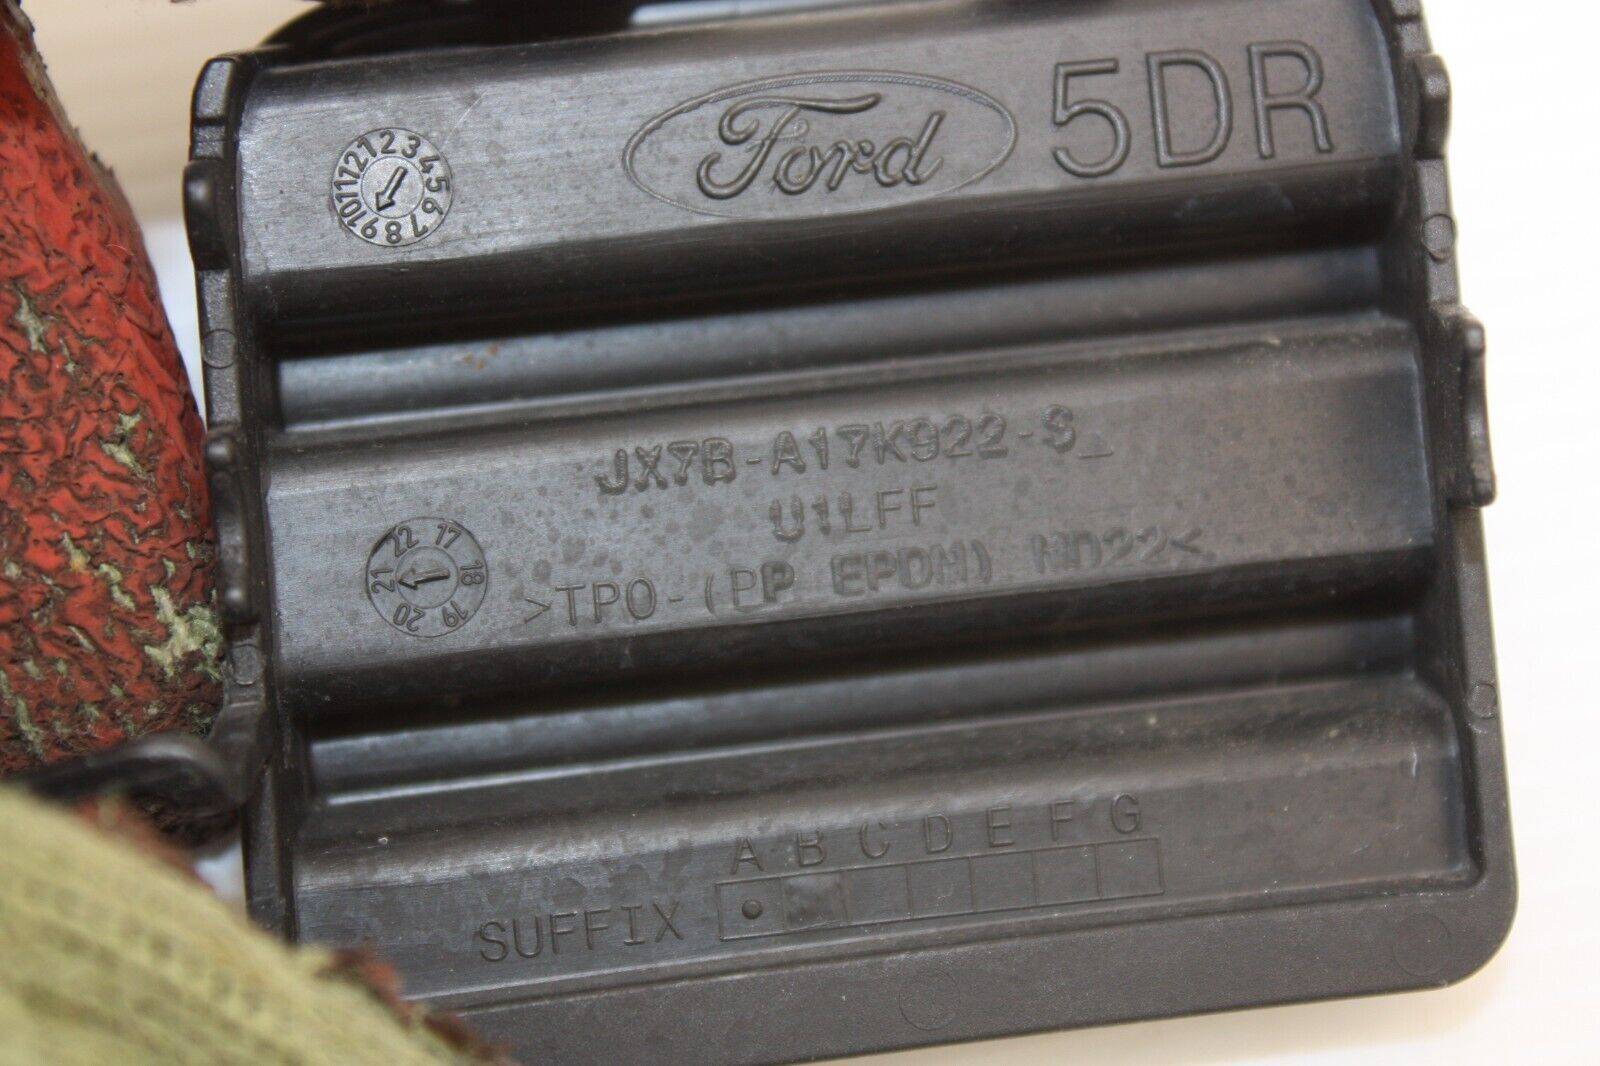 Ford-Focus-Rear-Bumper-Tow-Eye-Cover-JX7B-A17K922-S-Genuine-NEED-RESPRAY-175453820295-6